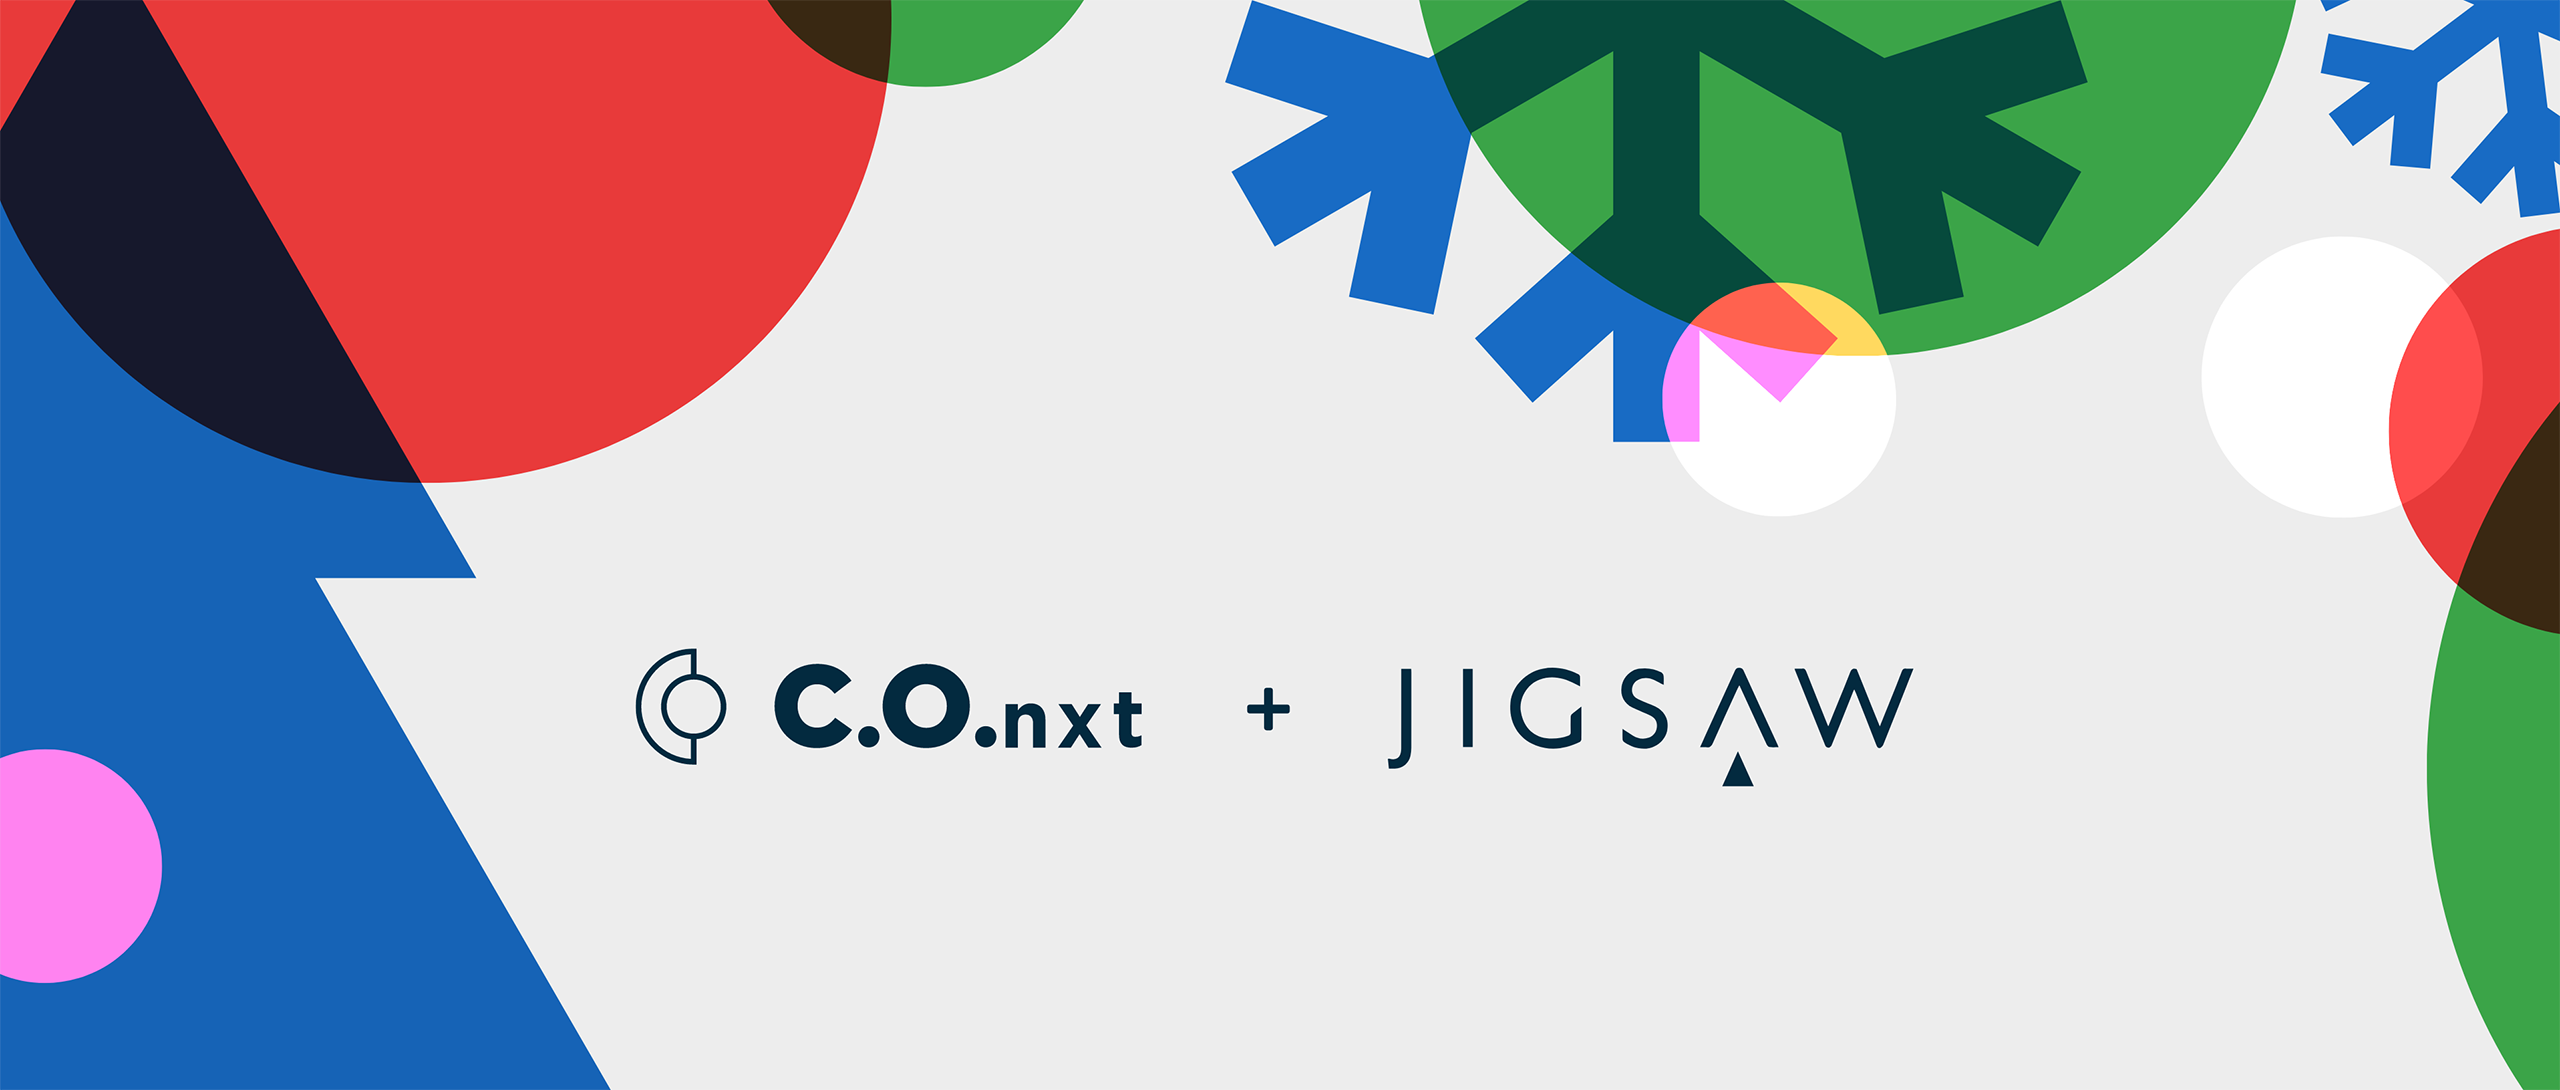 C.O.nxt + Jigsaw logos